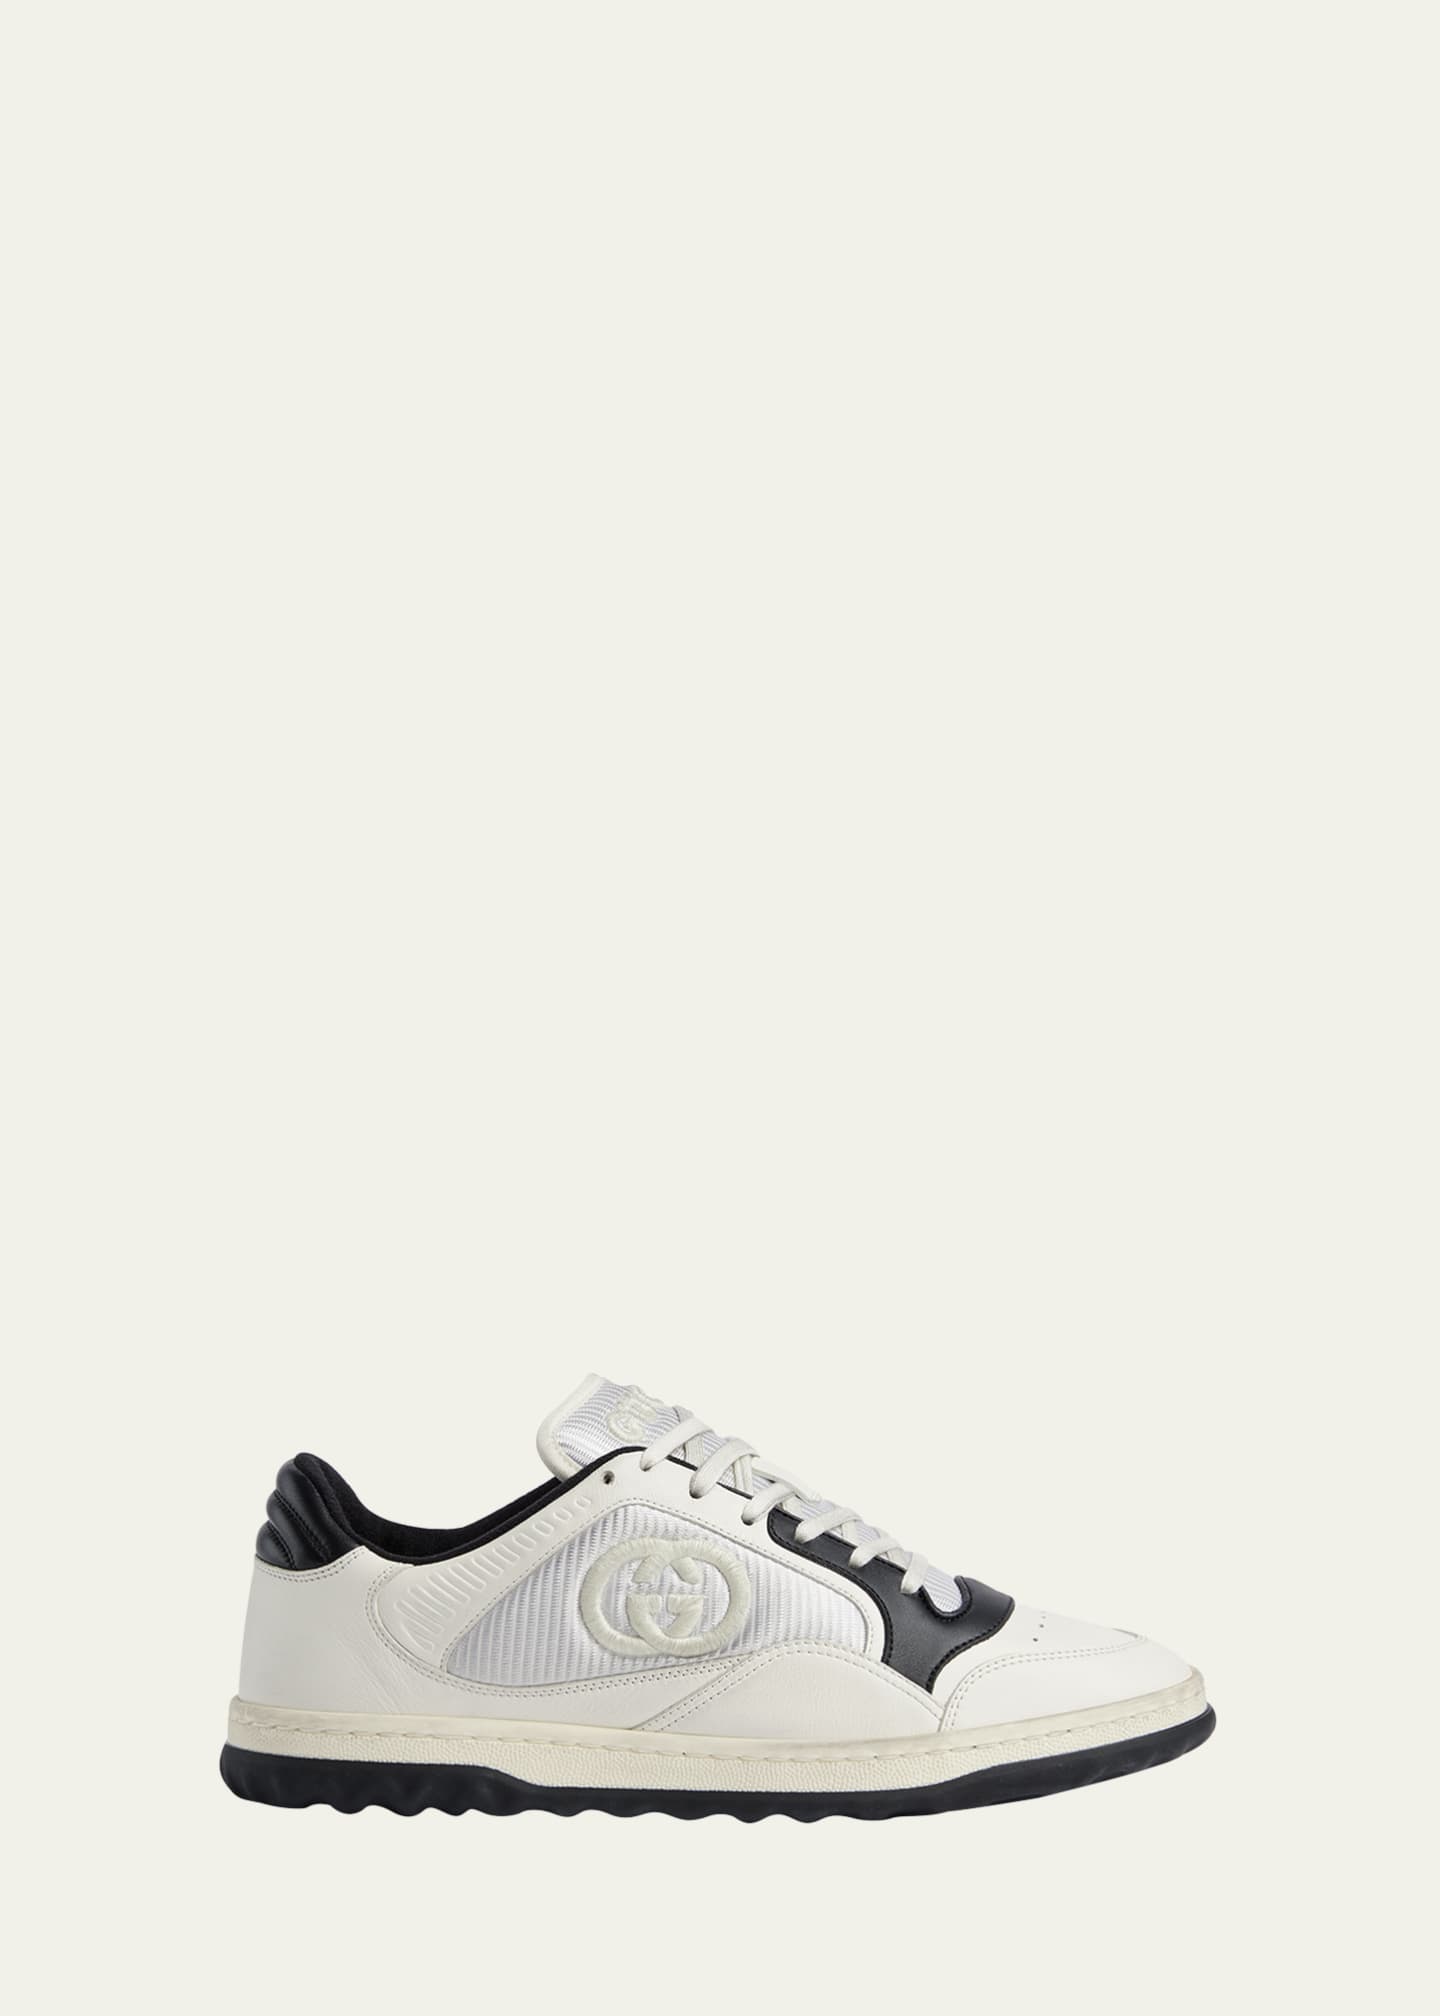 Gucci Women's Mac80 High Top Sneaker, White, Leather